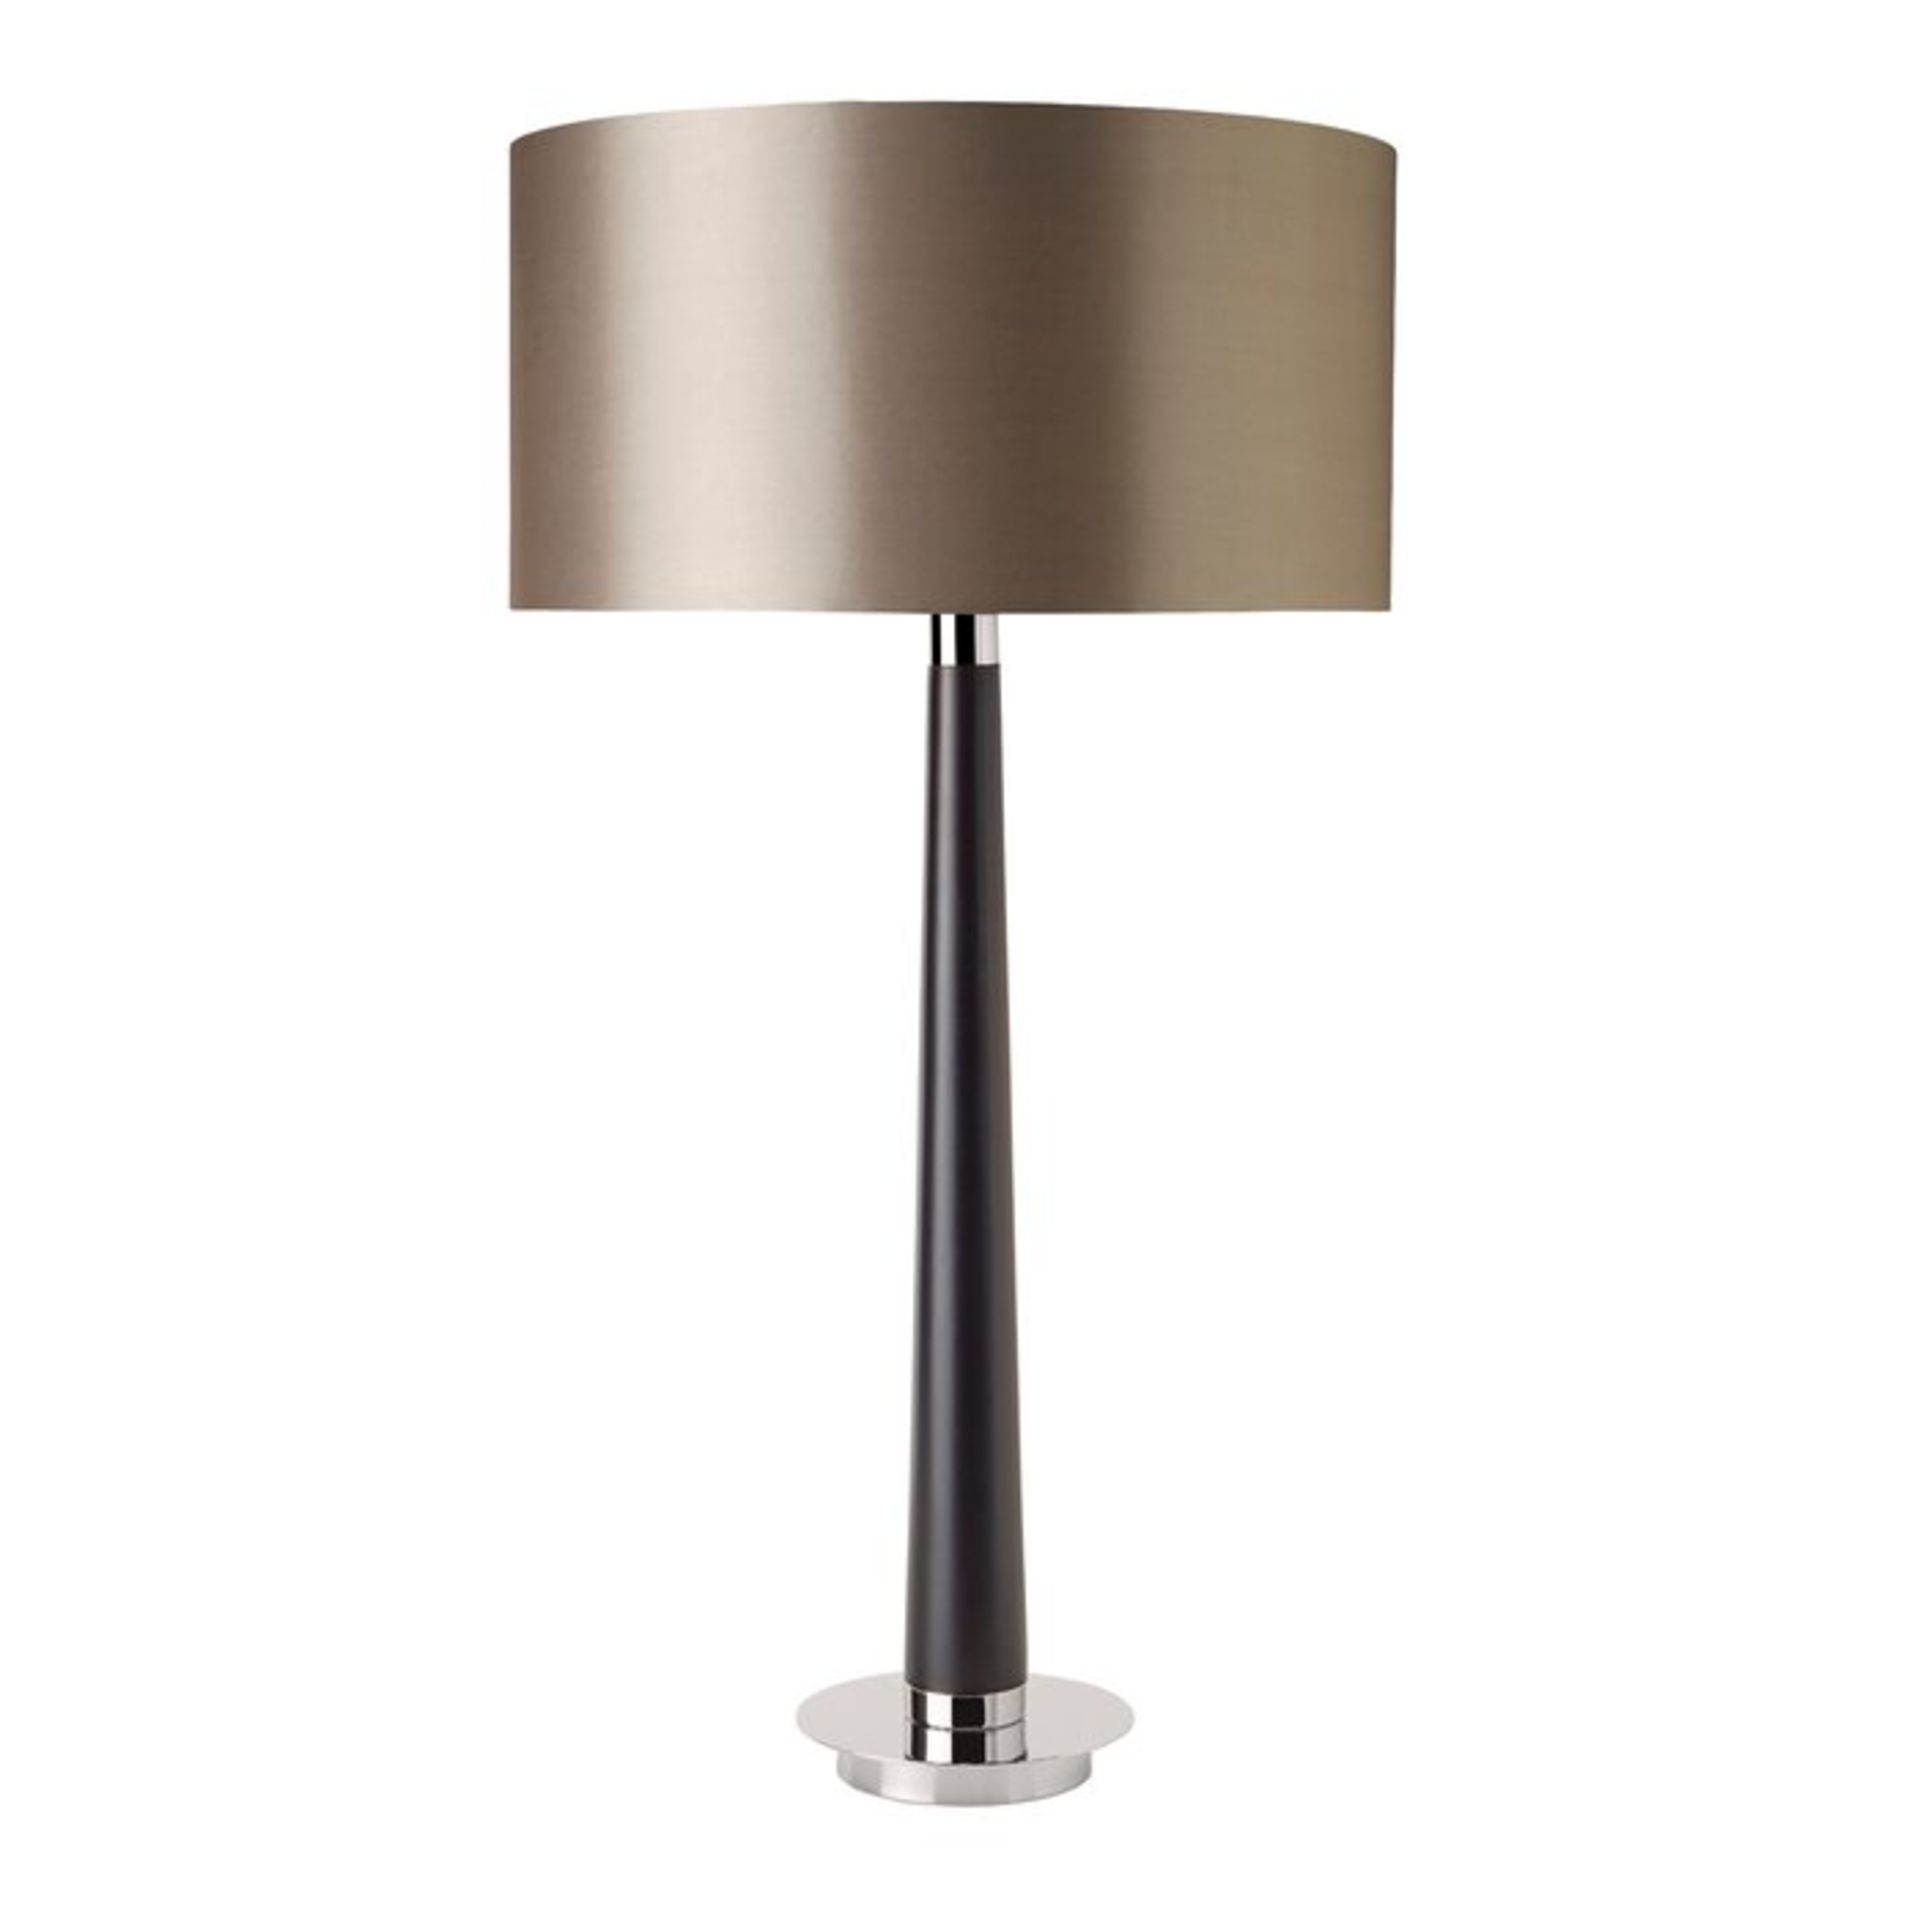 Lilah 77cm Table Lamp - RRP £132.00 - Image 2 of 2